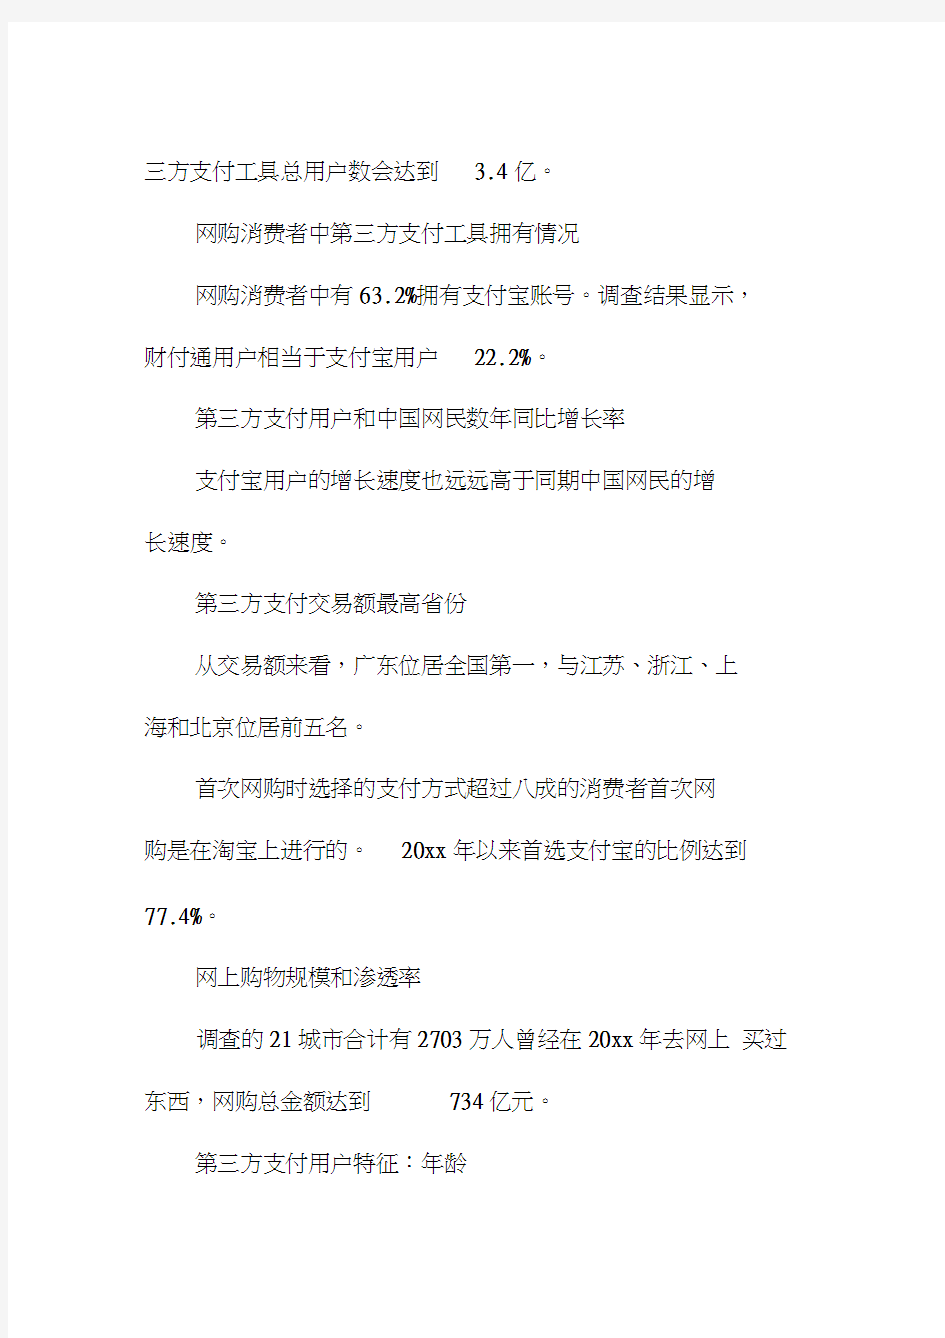 20xx年中国网购市场调查报告_1